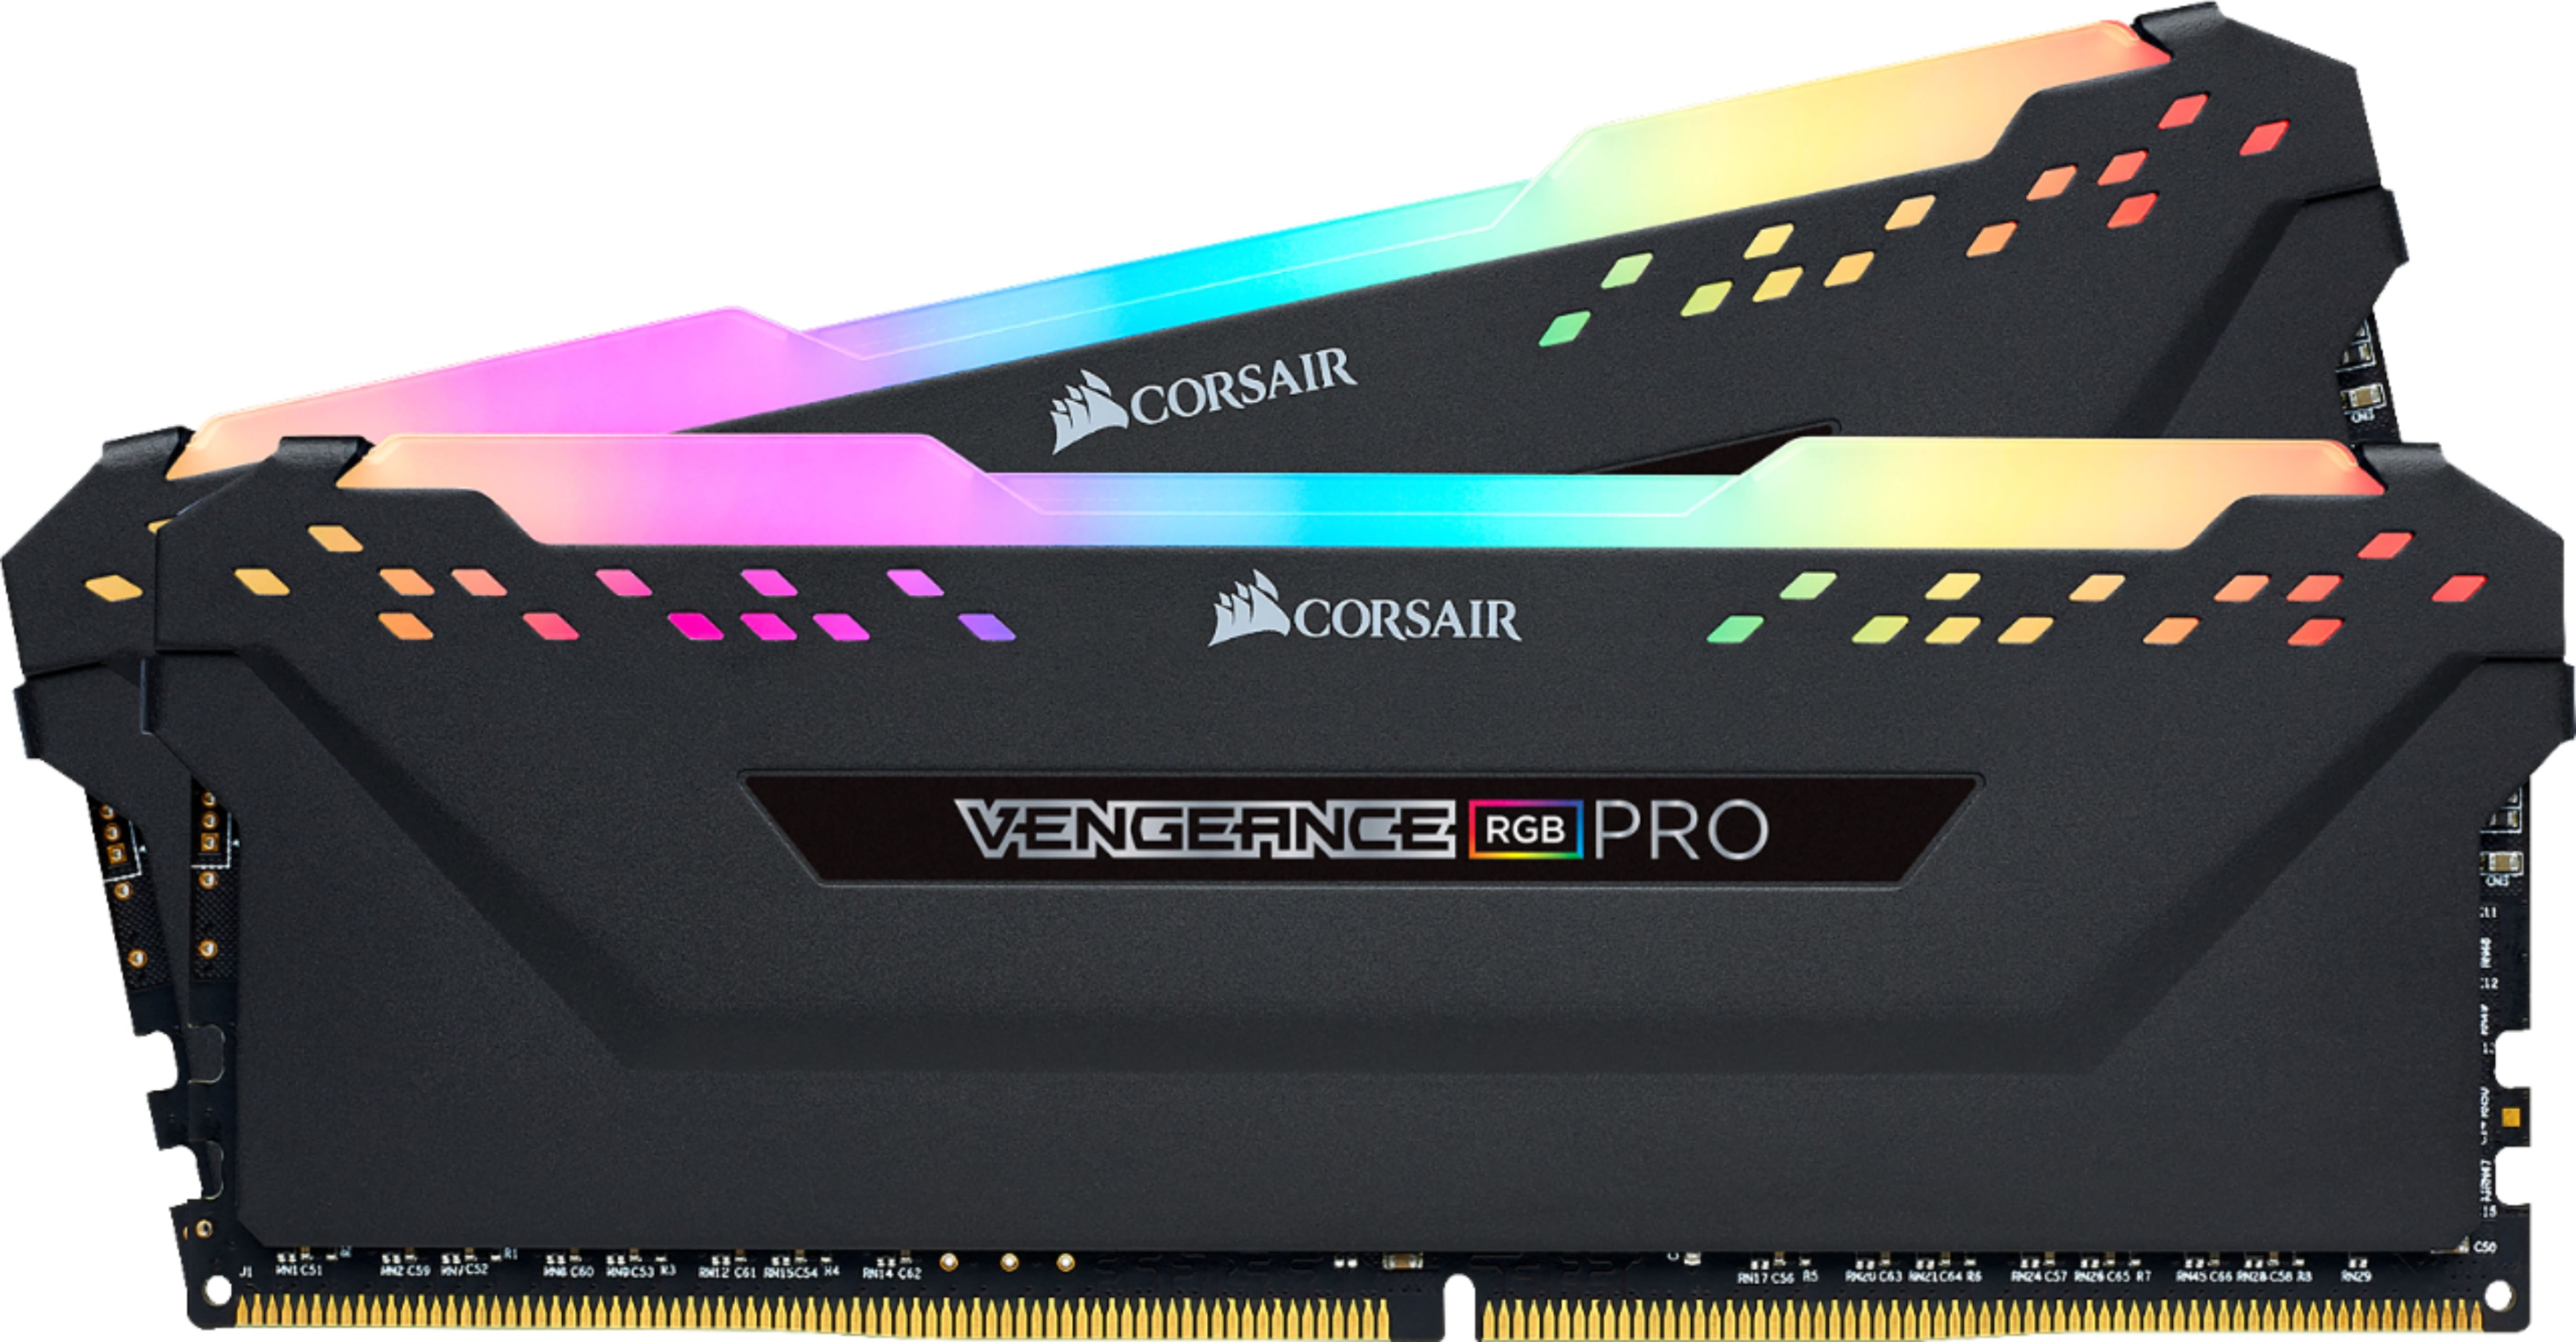 CORSAIR - Vengeance RGB PRO 32GB (2PK 16GB) 3.2GHz PC4-25600 DDR4 DIMM Unbuffered Non-ECC Desktop Memory Kit with RGB Lighting - Black